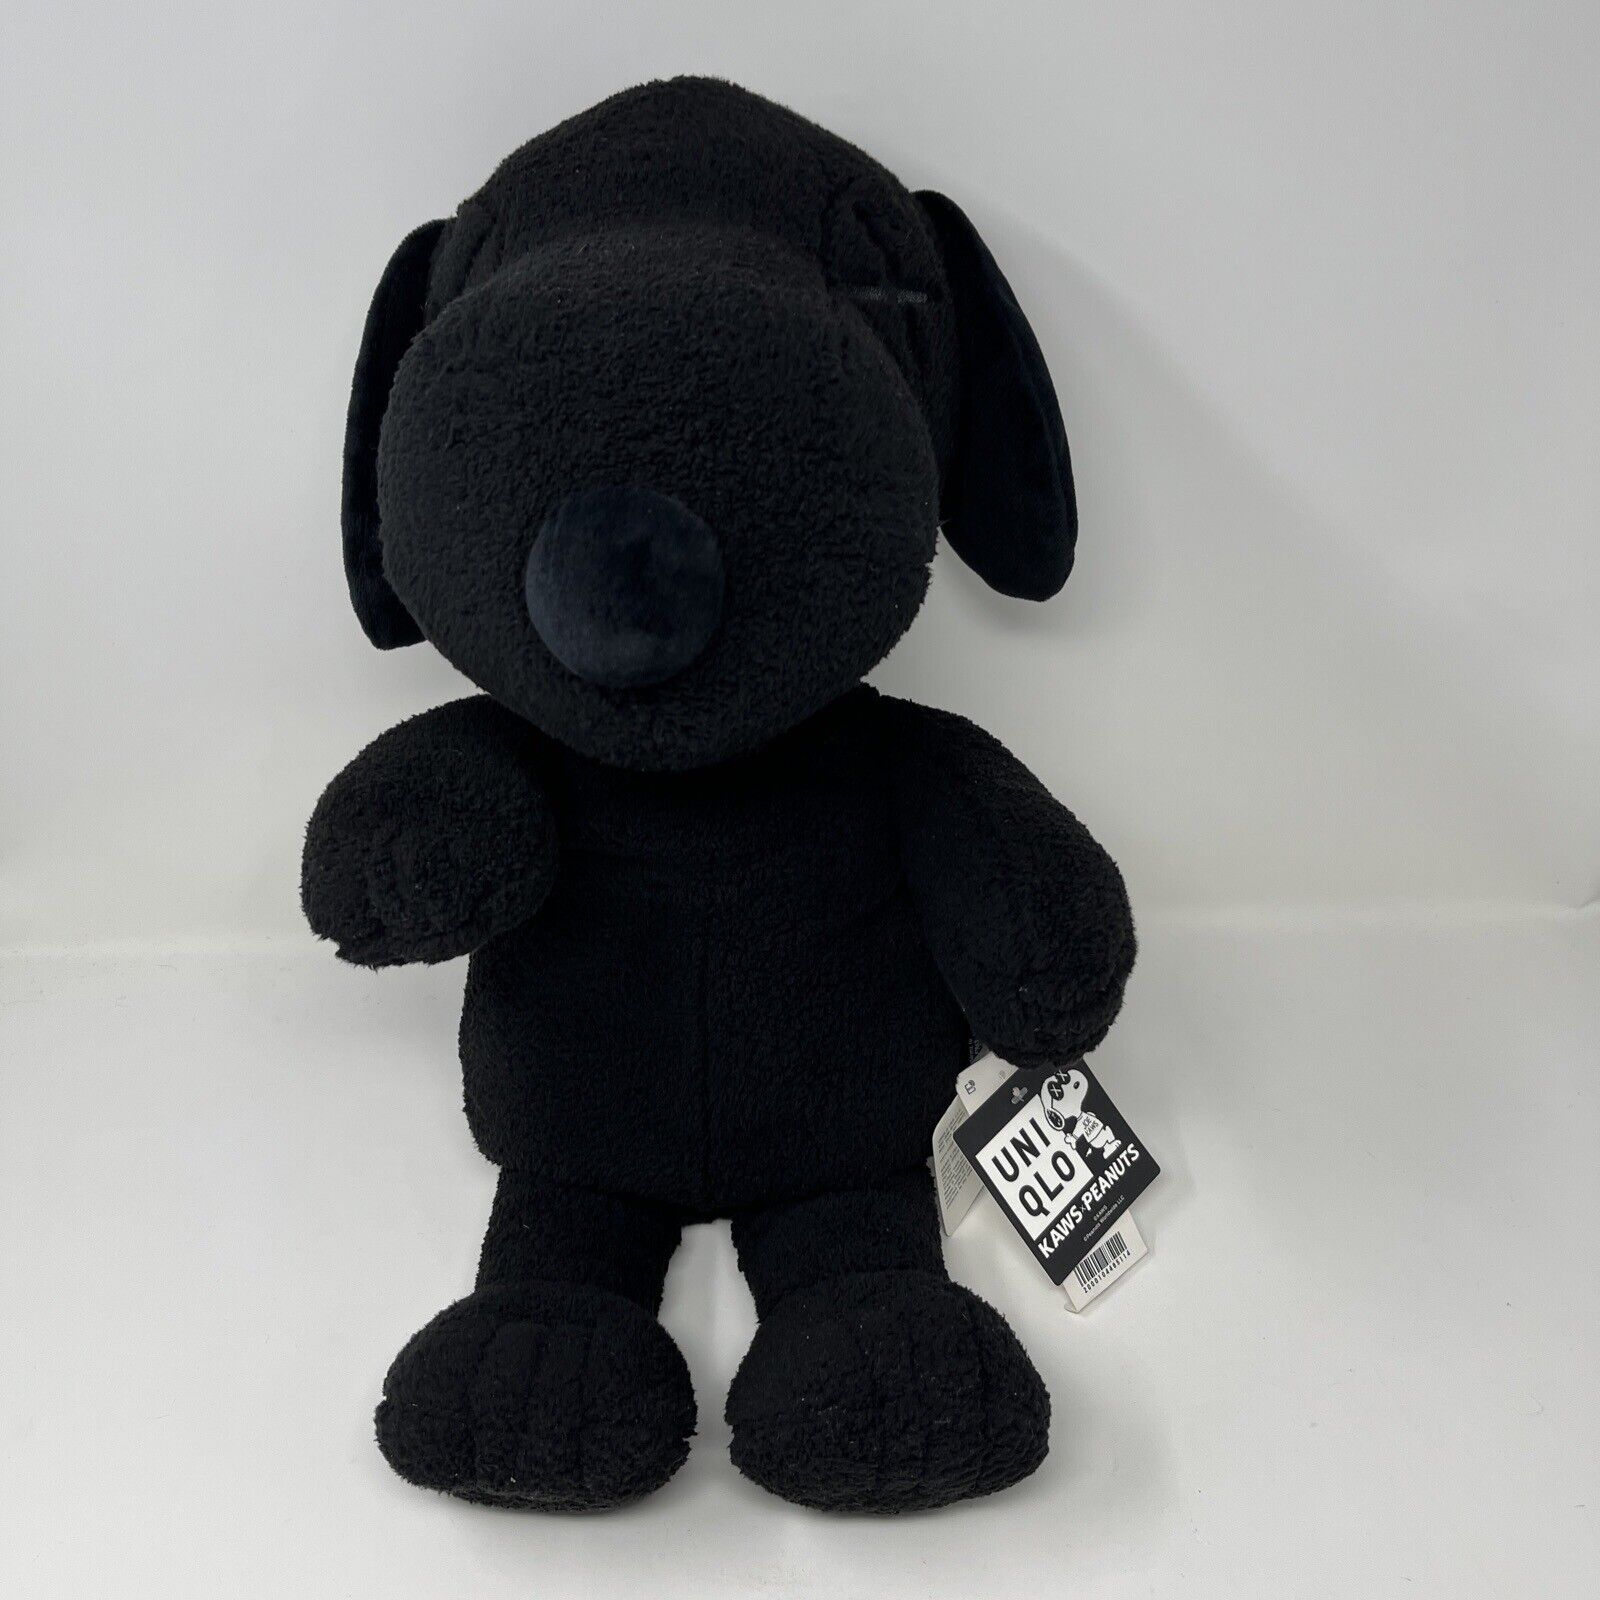 Uniqlo x Kaws x Peanuts Black Dog Snoopy Small Plush Figures Brand New Rare HTF